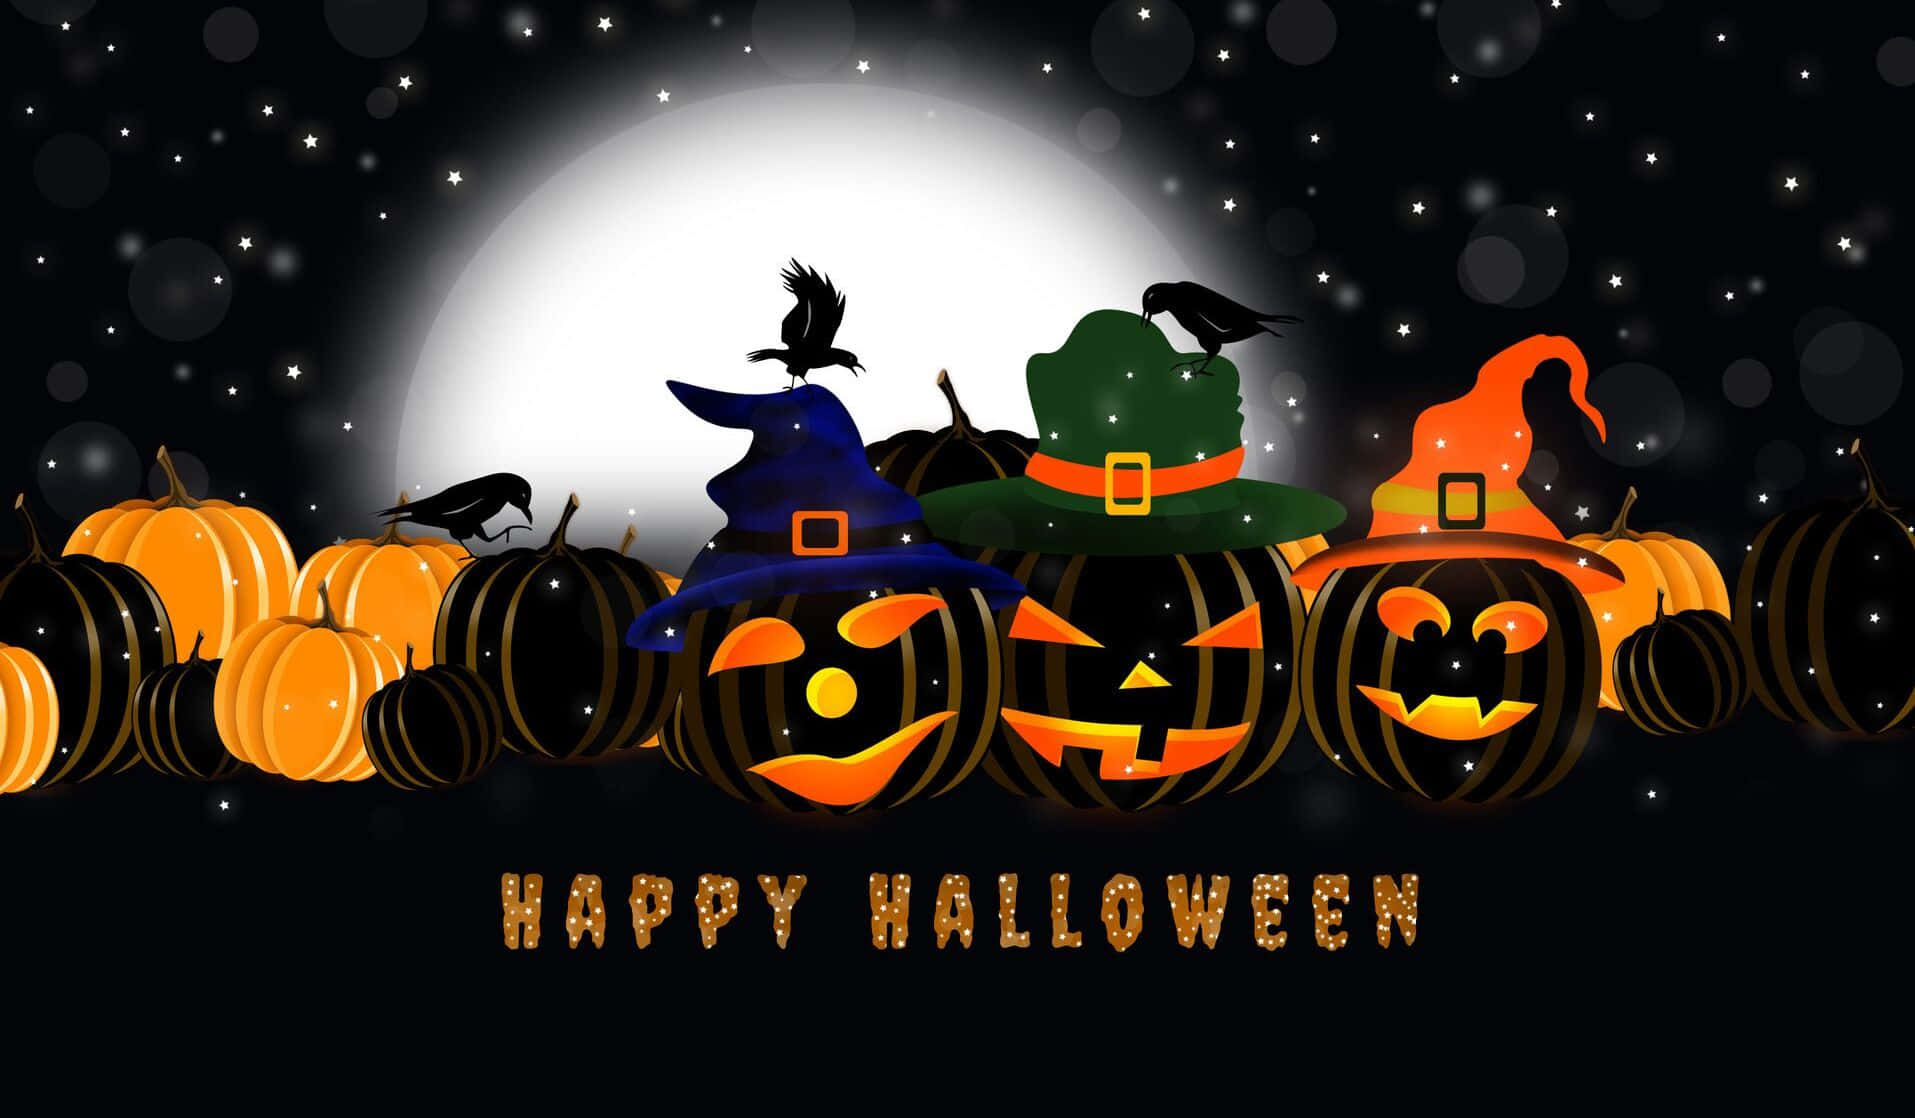 Spooktacular Halloween Party!